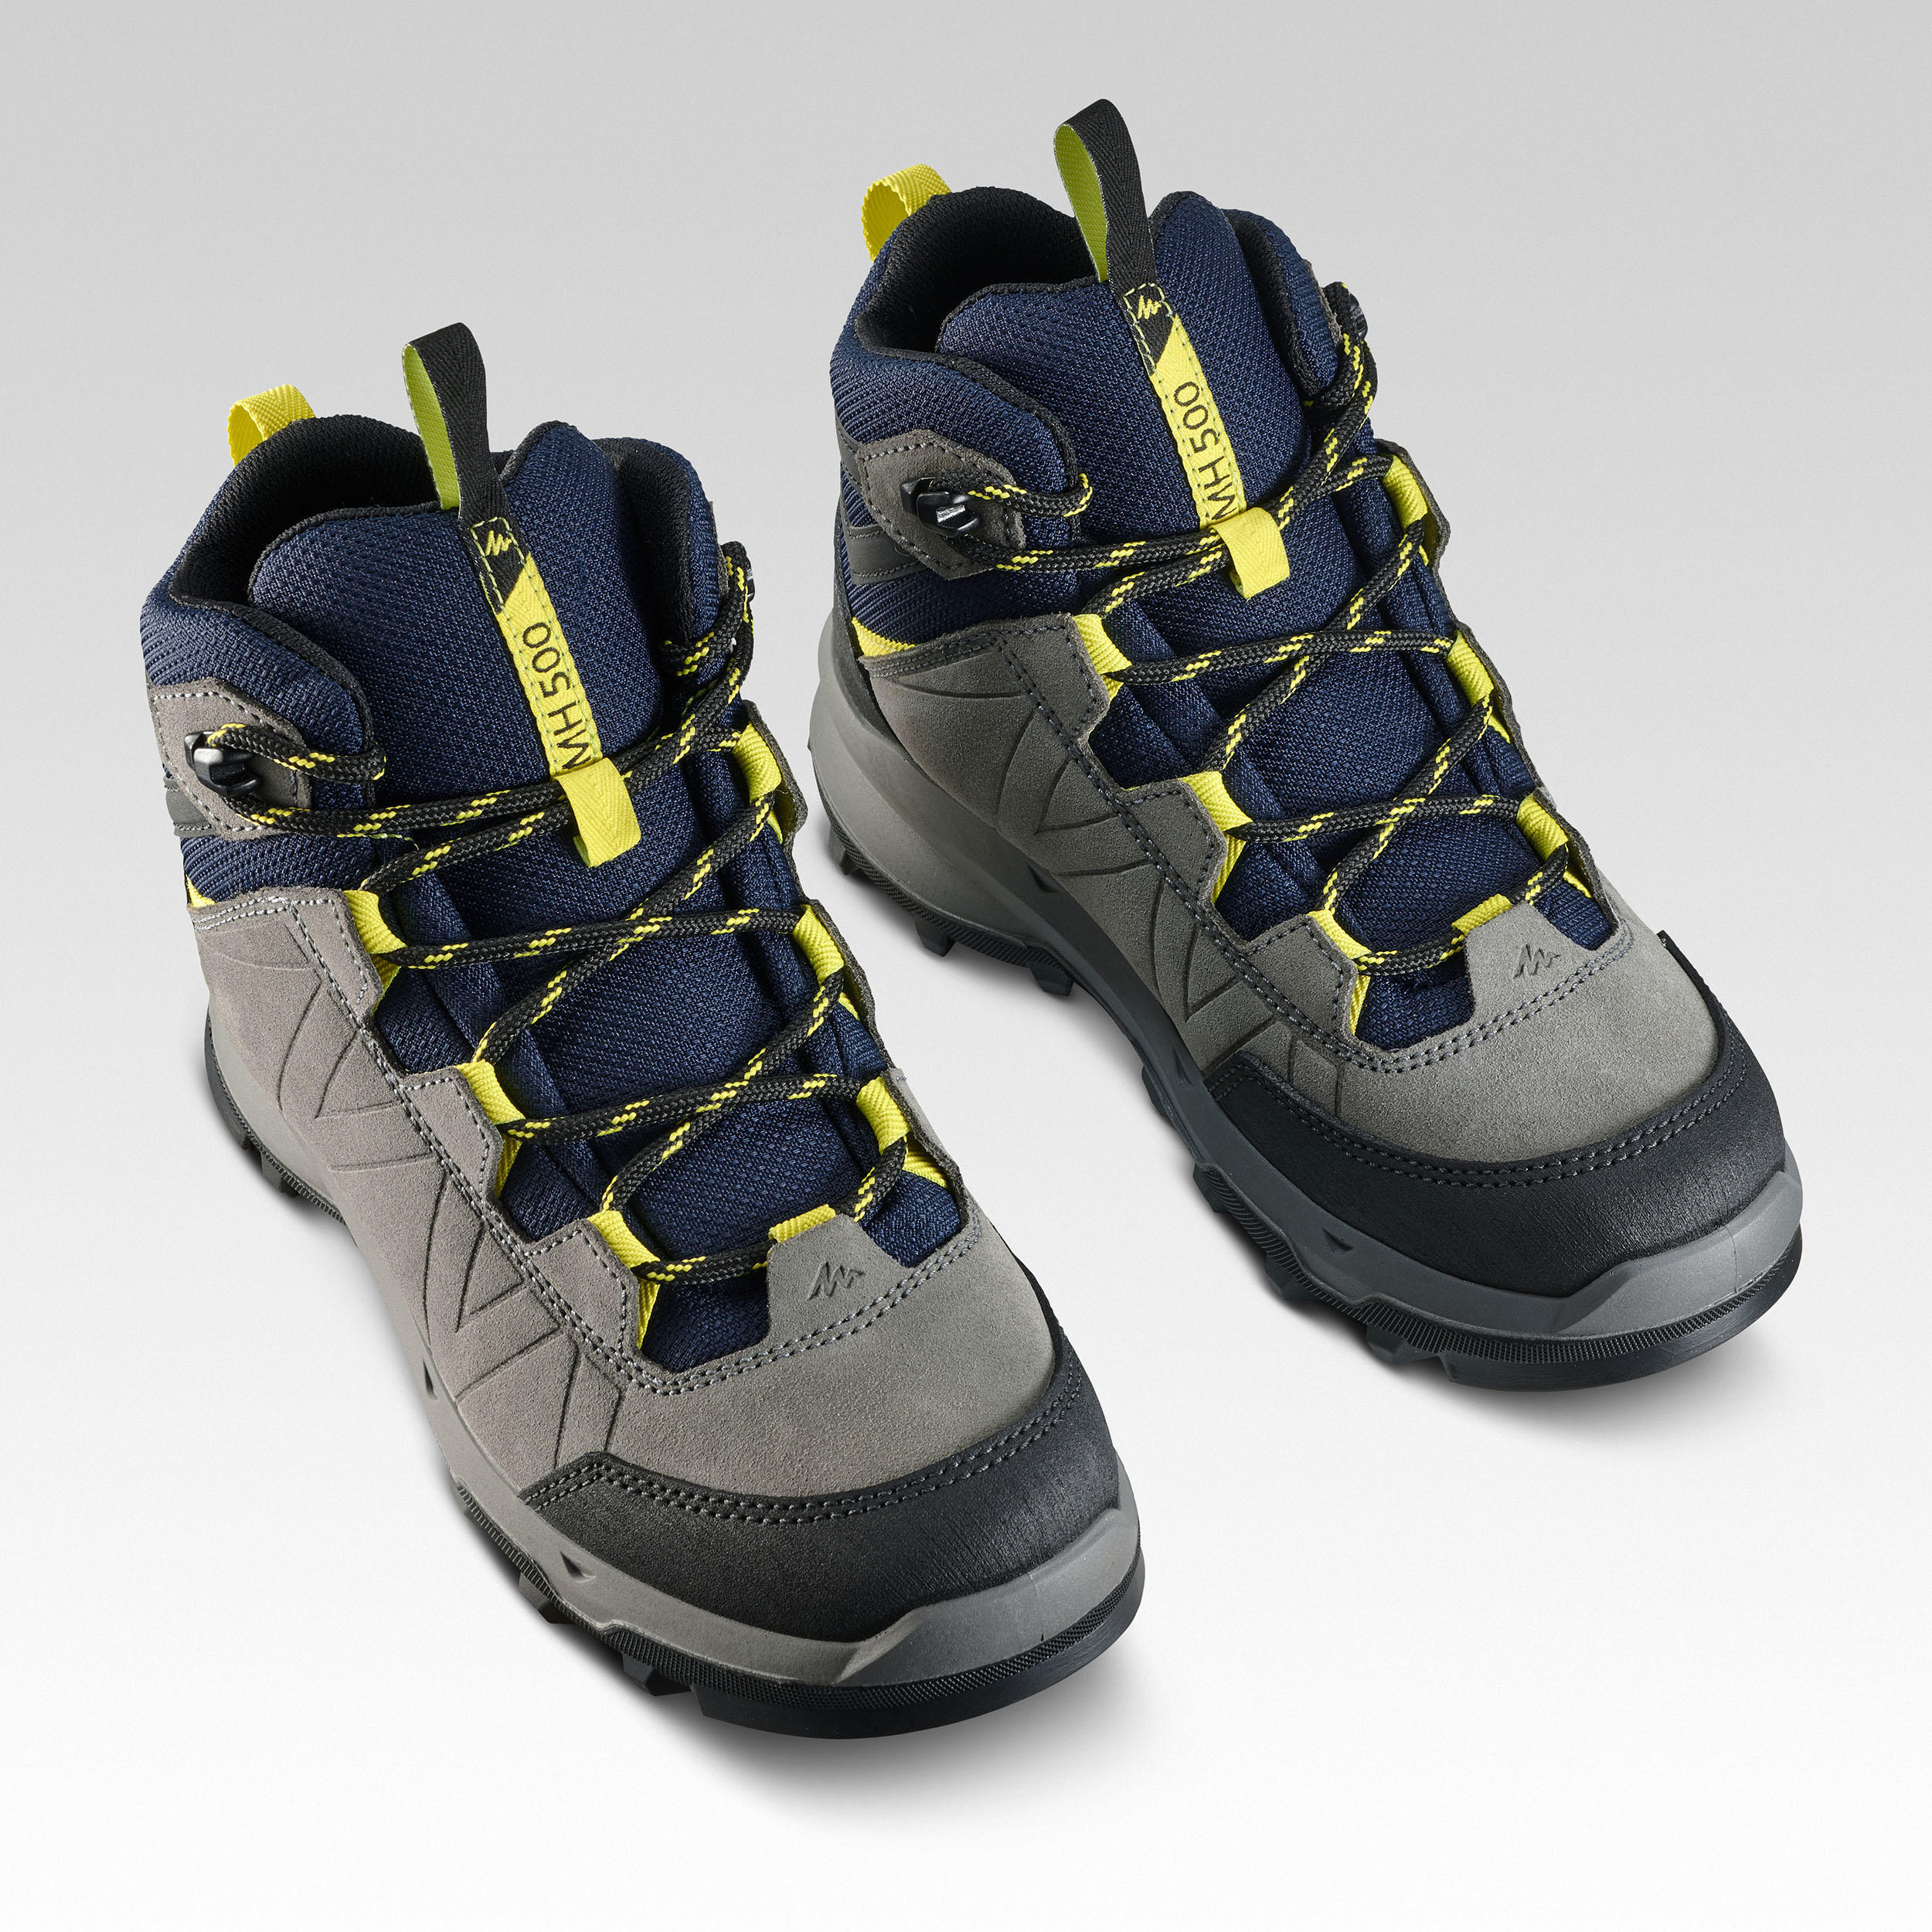 Kids’ Waterproof Hiking Boots - MH500 - 2nd Choice Grade B 4/6